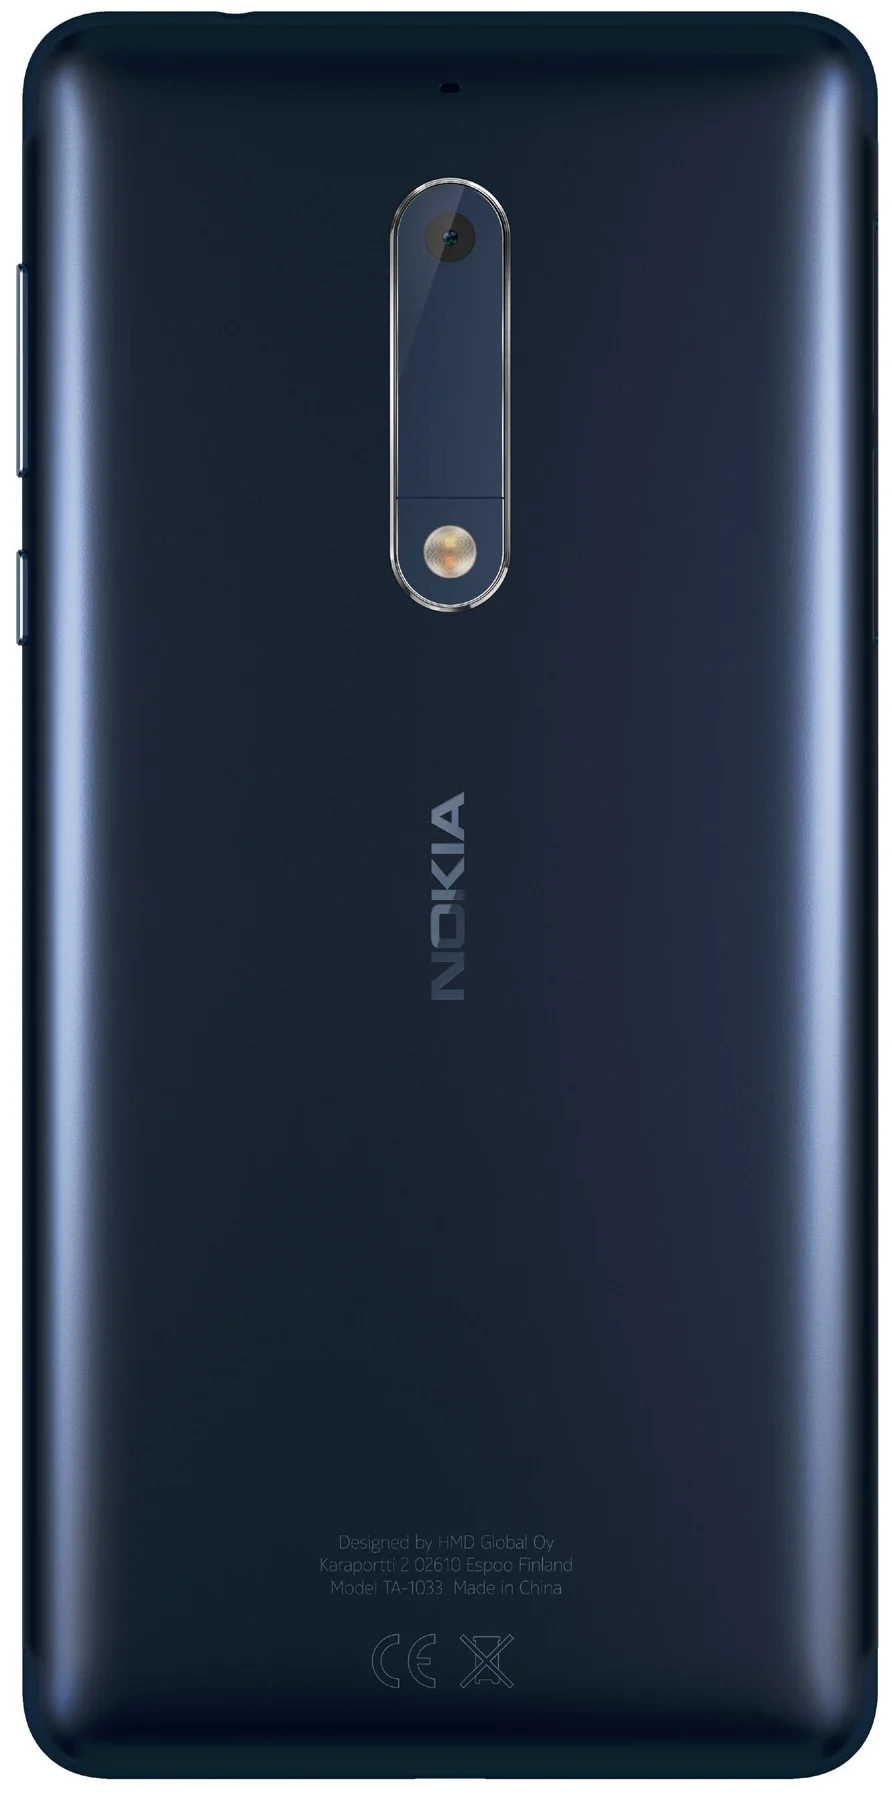 Nokia 5 - камера: 13 МП